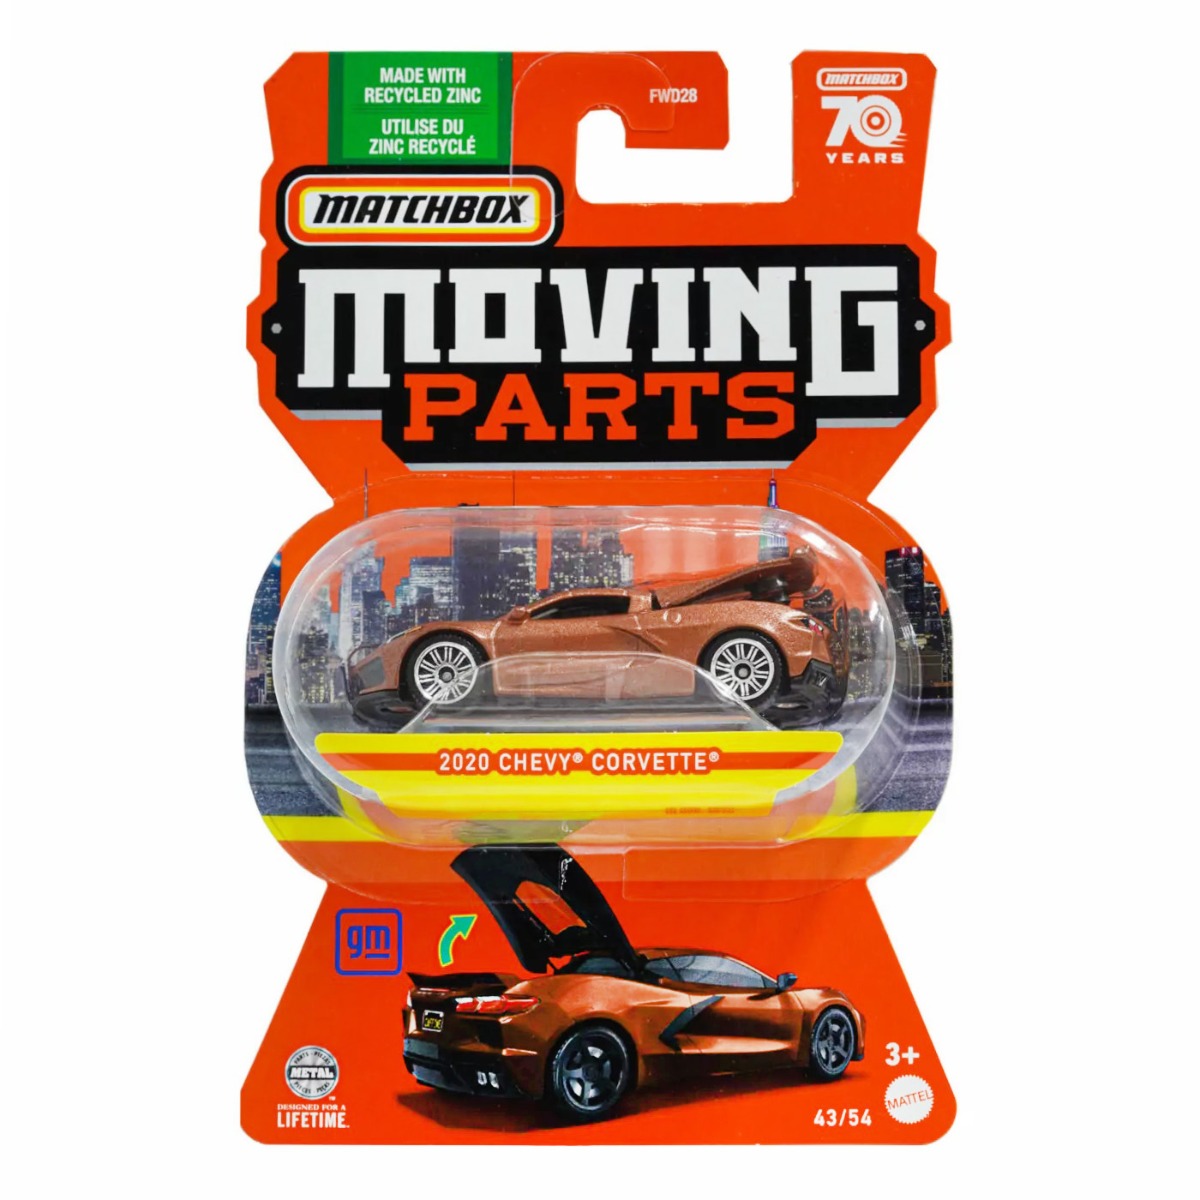 Poze Masinuta Matchbox, Moving Parts, 2020 Chevy Corvette, 1:64, HLG28